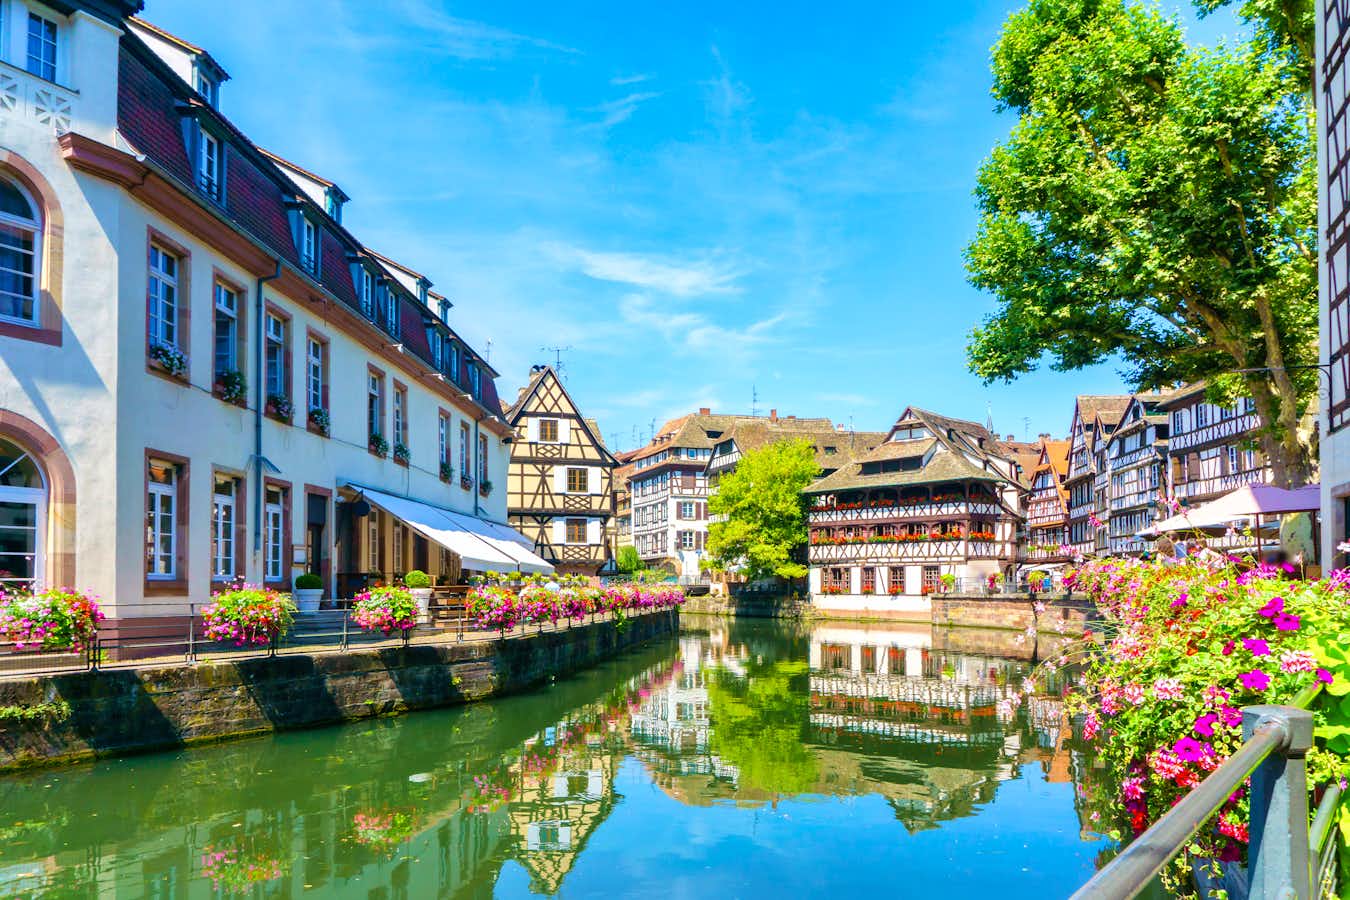 Picturesque Alsace, Strasbourg, Colmar & Charming Villages - Leger Holidays